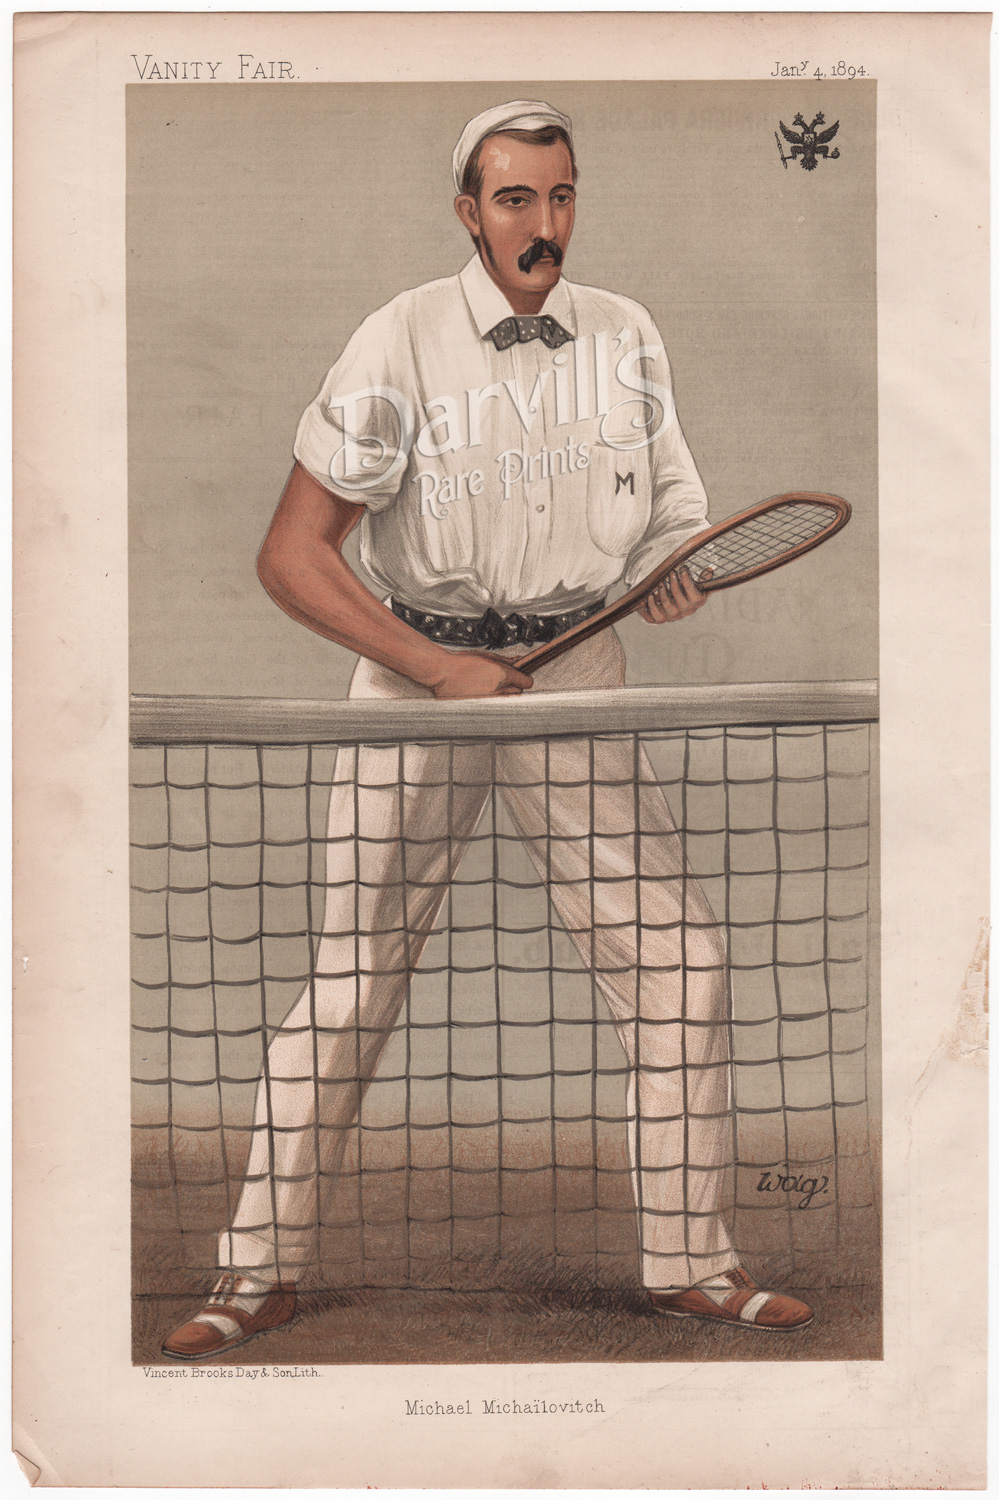 The Grand Duke Michael Michailovitch of Russia 1894 tennis player